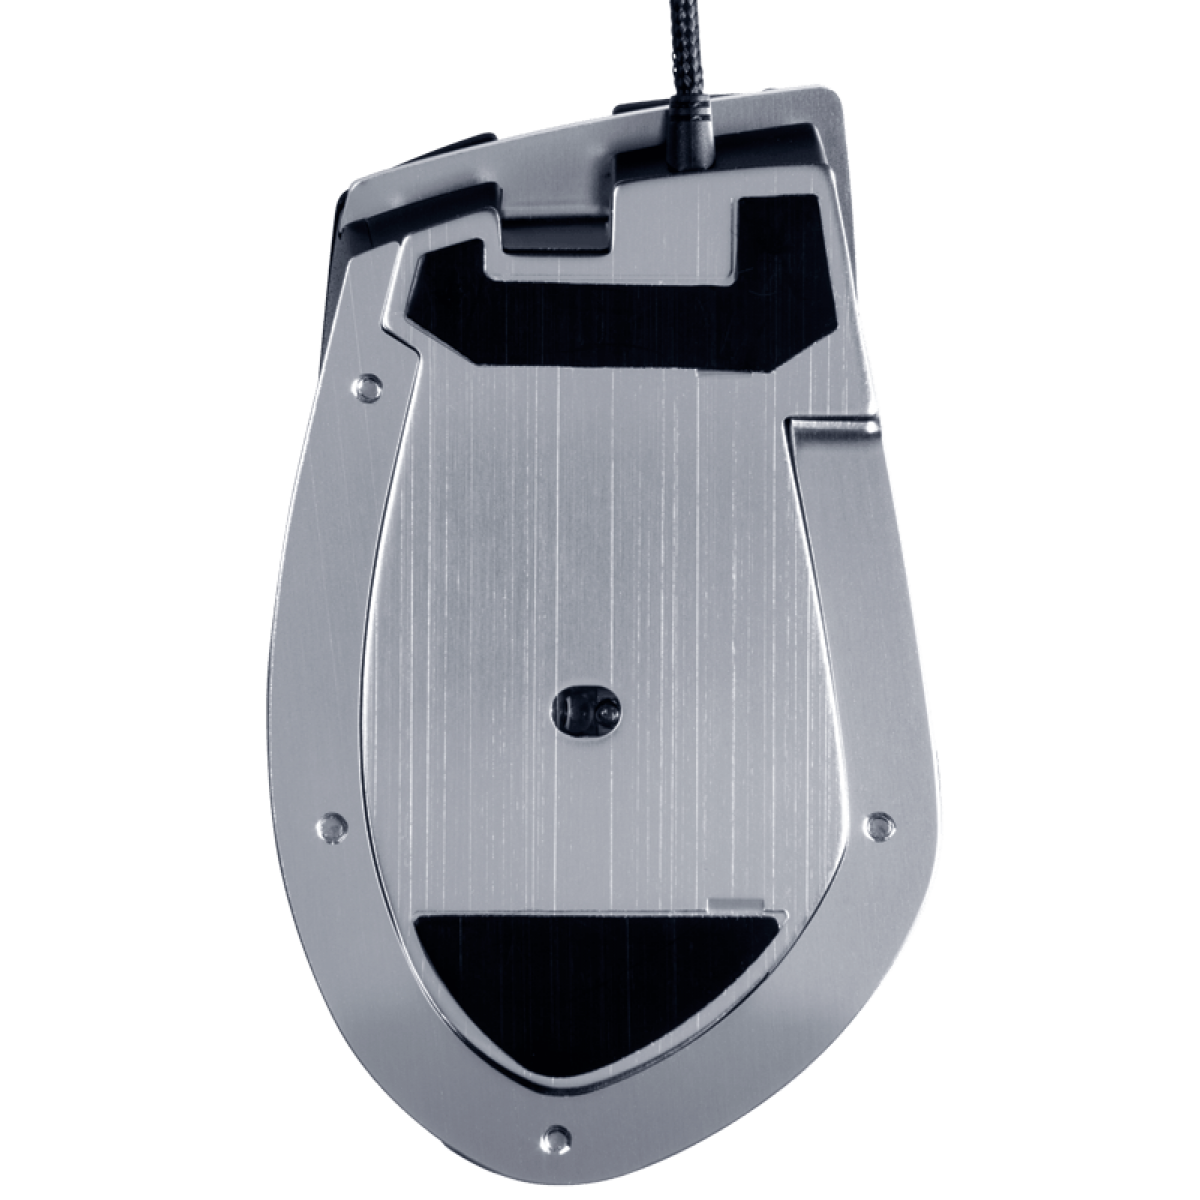 Mouse Corsair Vengeance M95 MMO/RTS Gunmetal Black CH-9000025-NA 8200DPI - USB